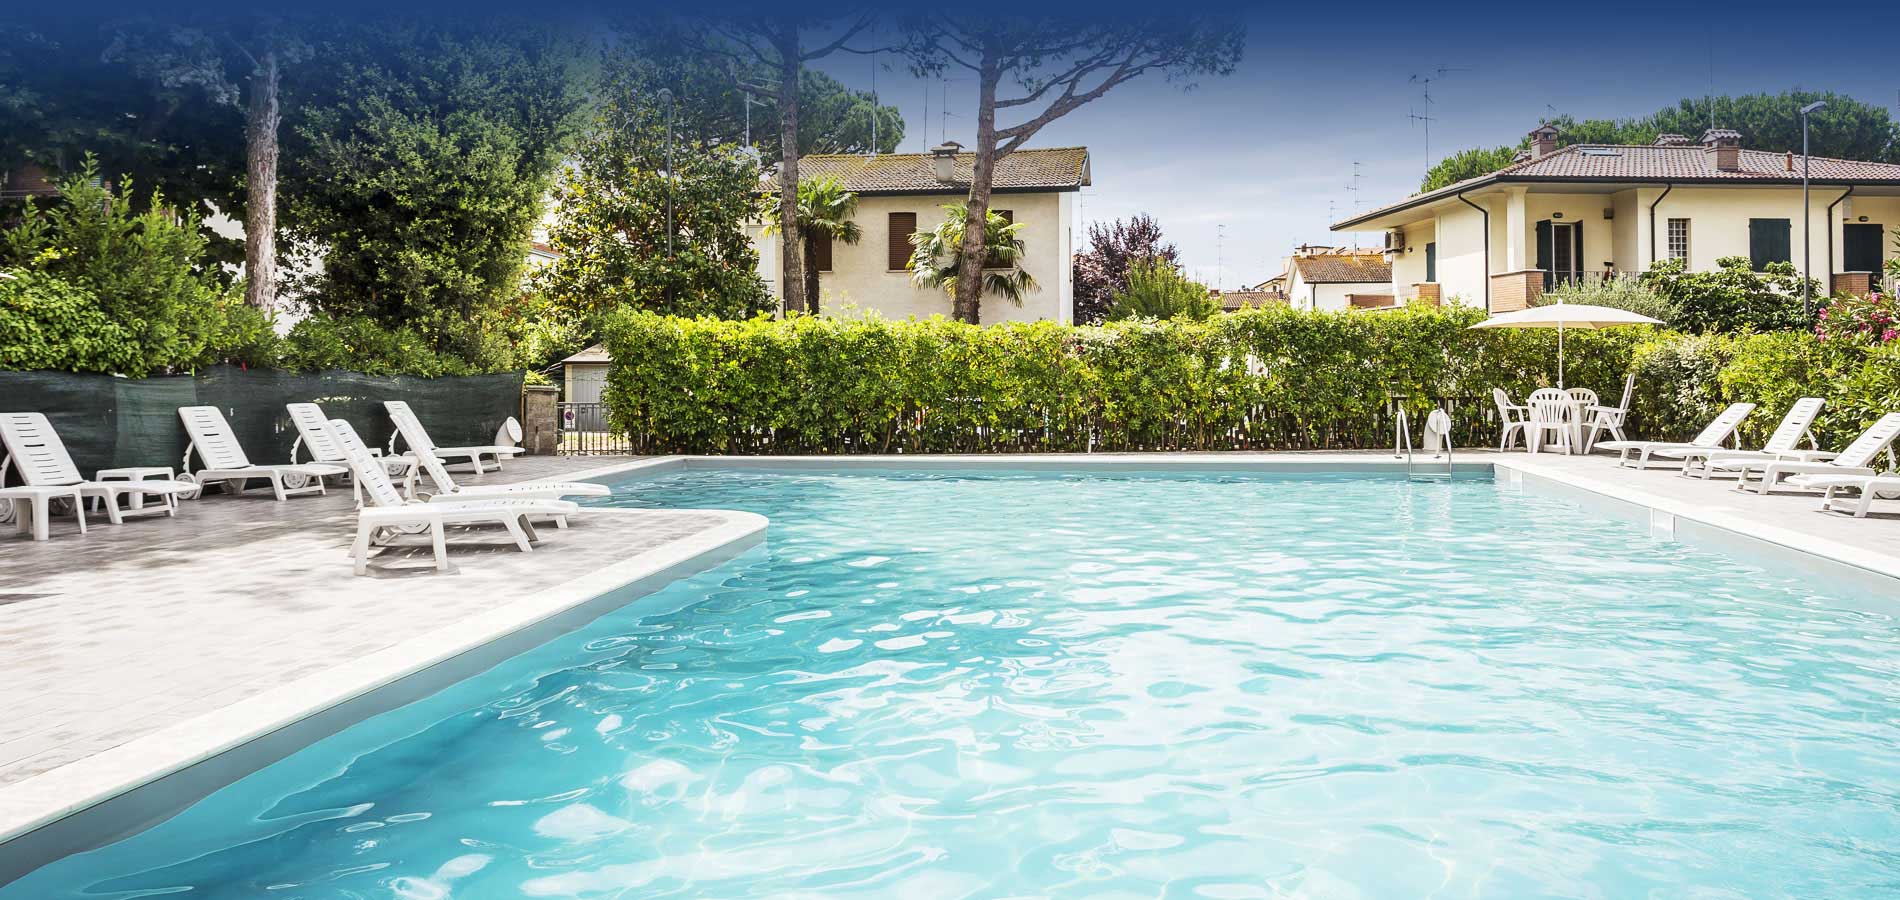 3-star Hotel Dafne with swimming pool in Punta Marina Terme